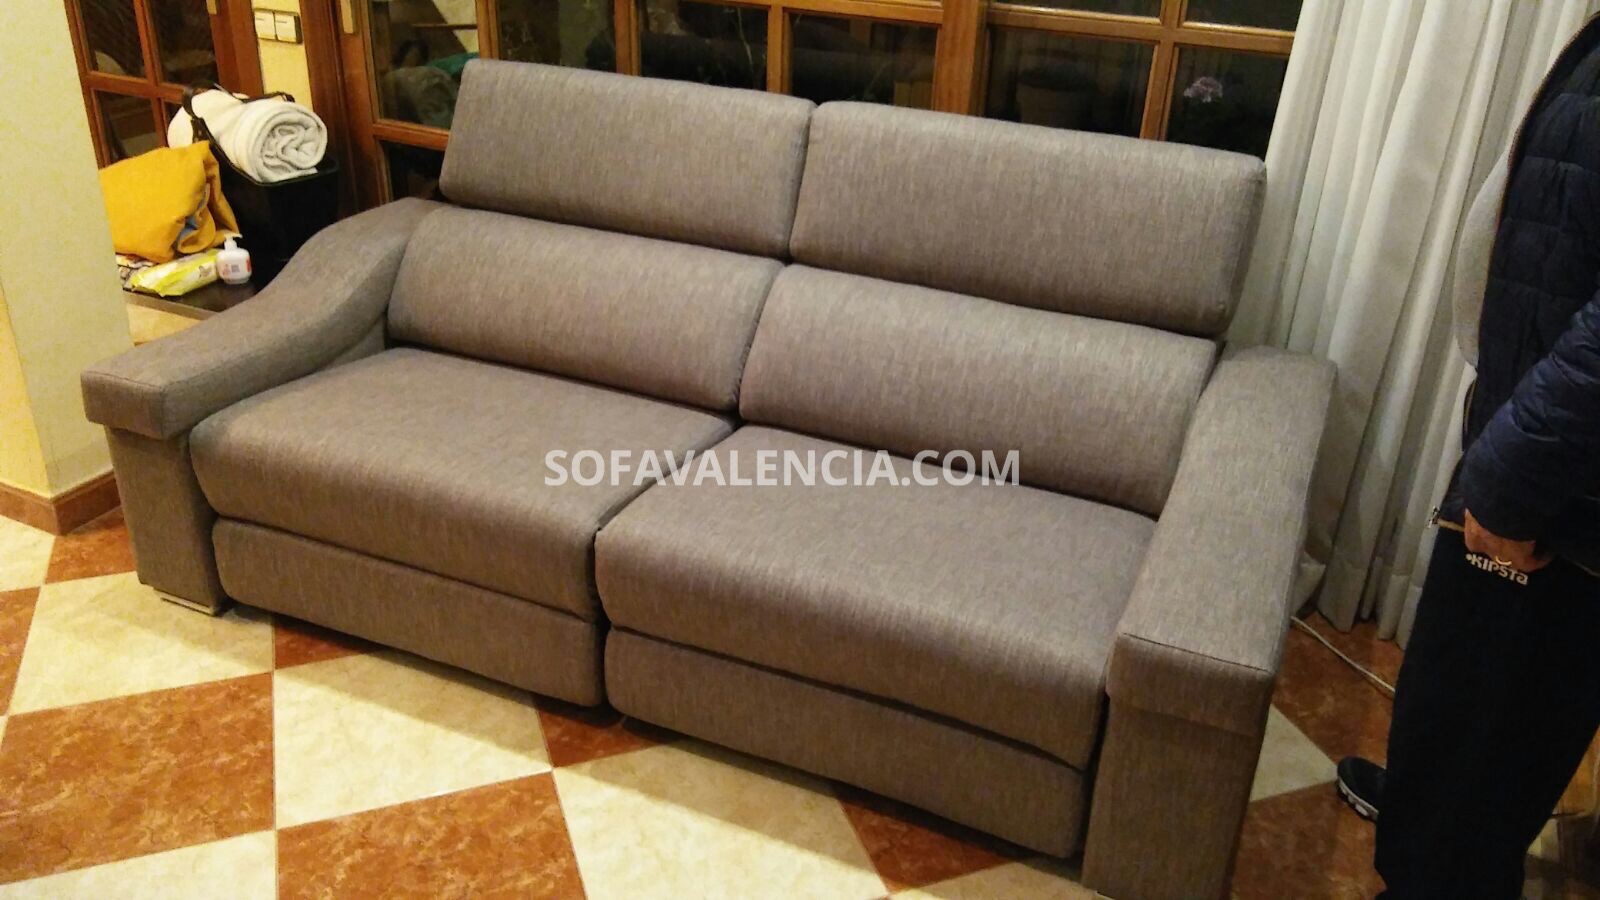 sofa-valencia-fotos-clientes-68